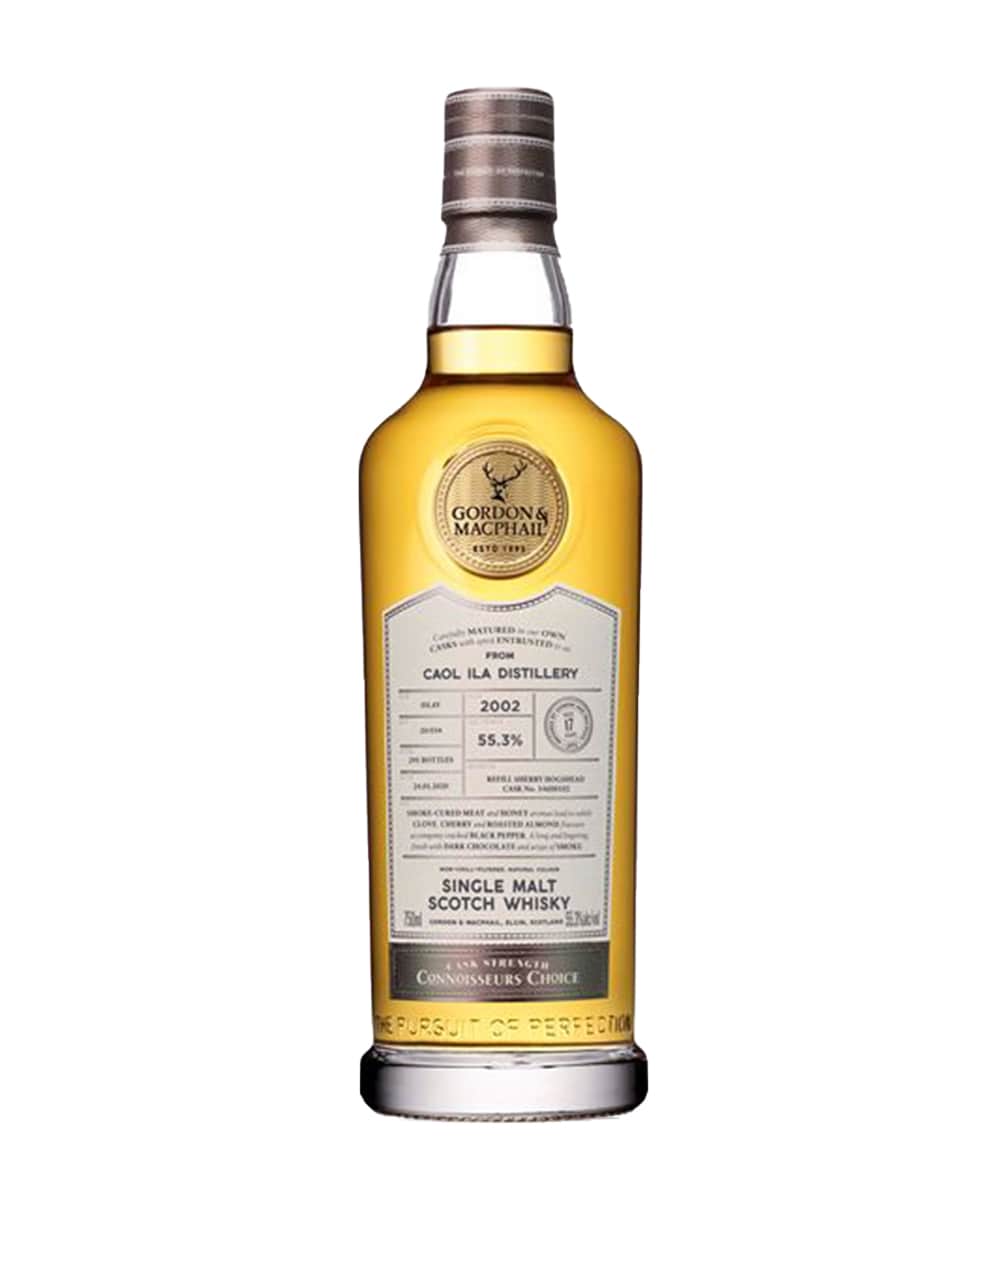 Gordon & Macphail Caol Ila Distillery 17 Year old single malt scotch whisky